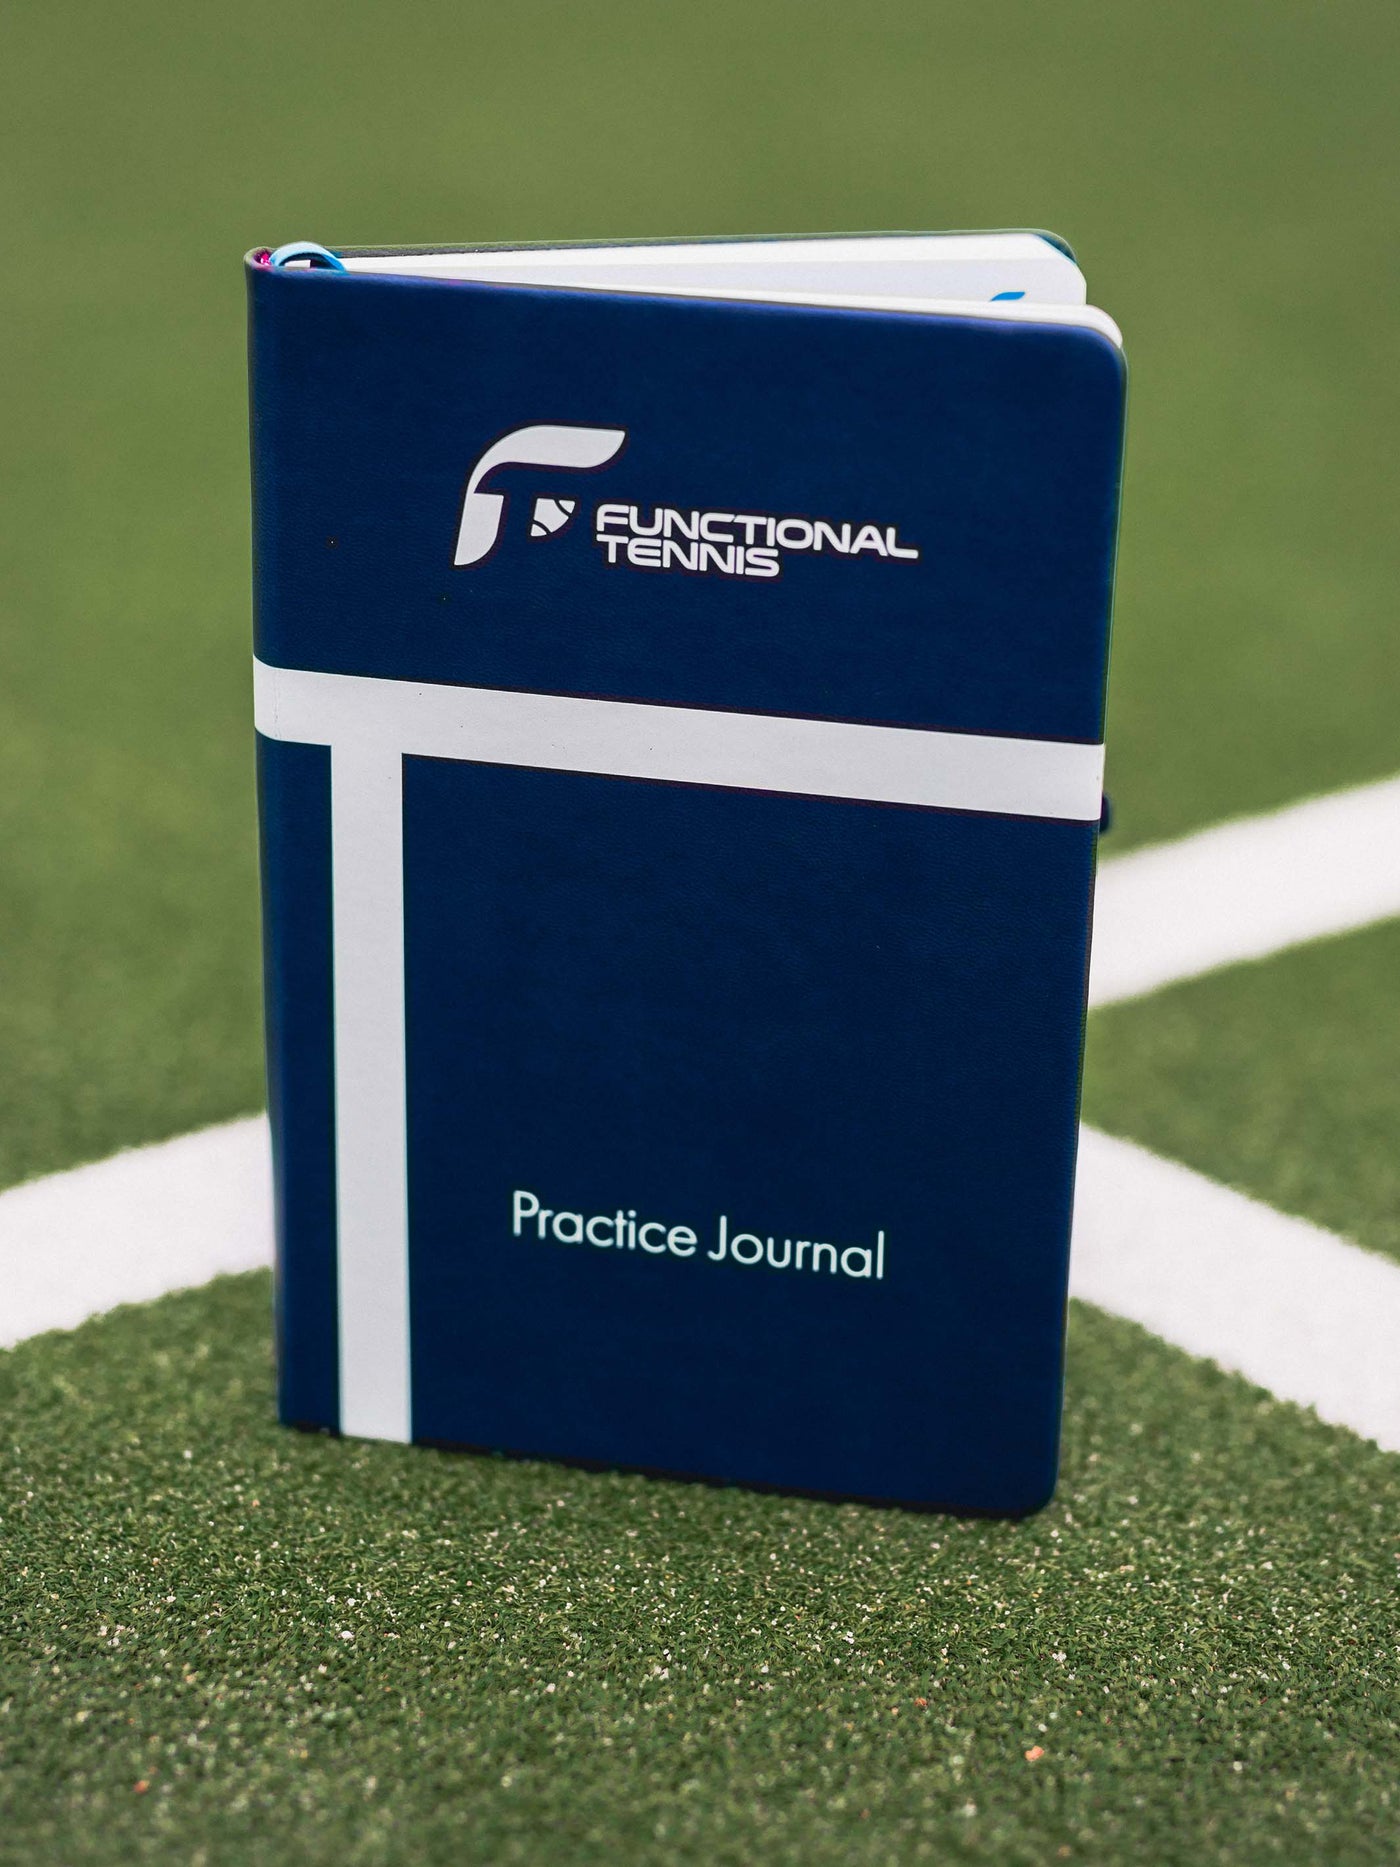 The Functional Tennis Practice Journal